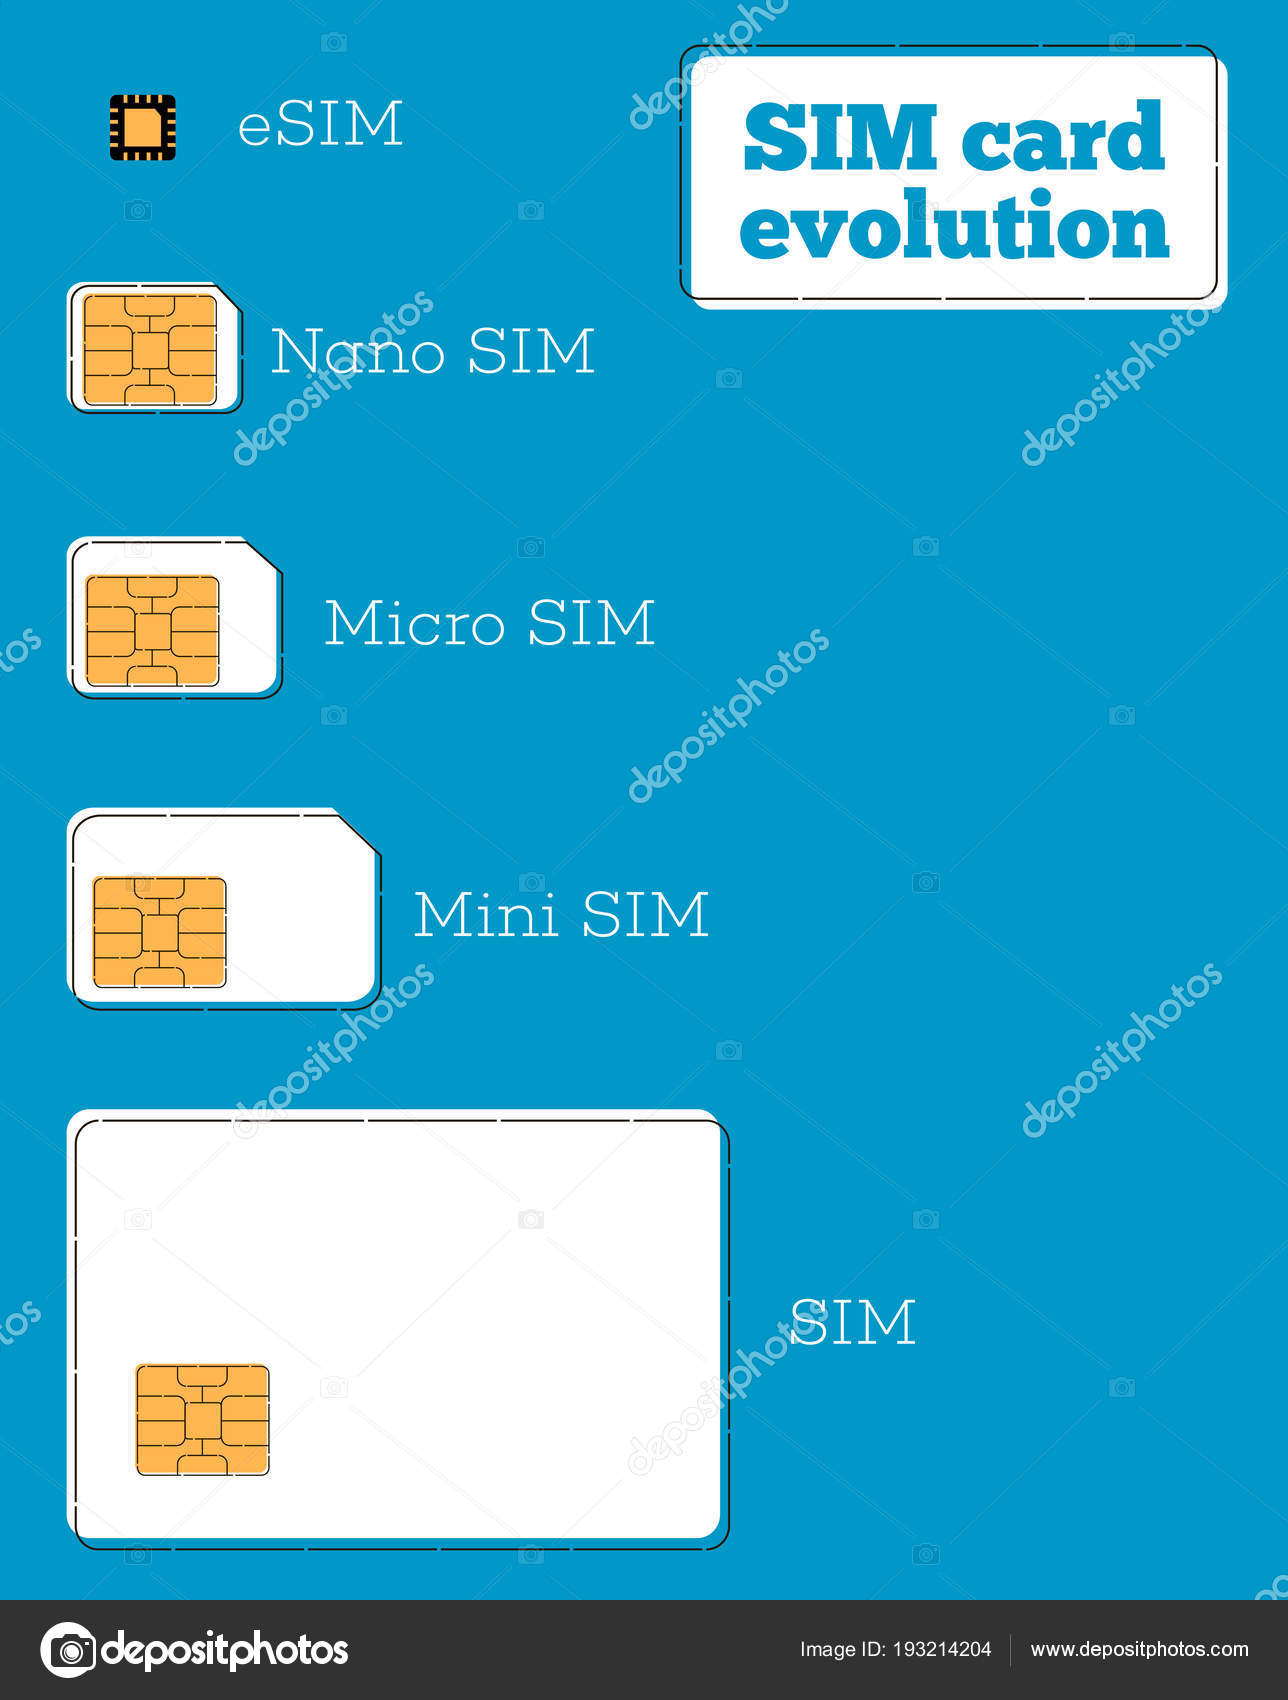 1 sim 1 esim. Эволюция SIM-карт. Nano SIM И Esim что это. Evolution of SIM Card. 1 Nano SIM + 1 Esim.